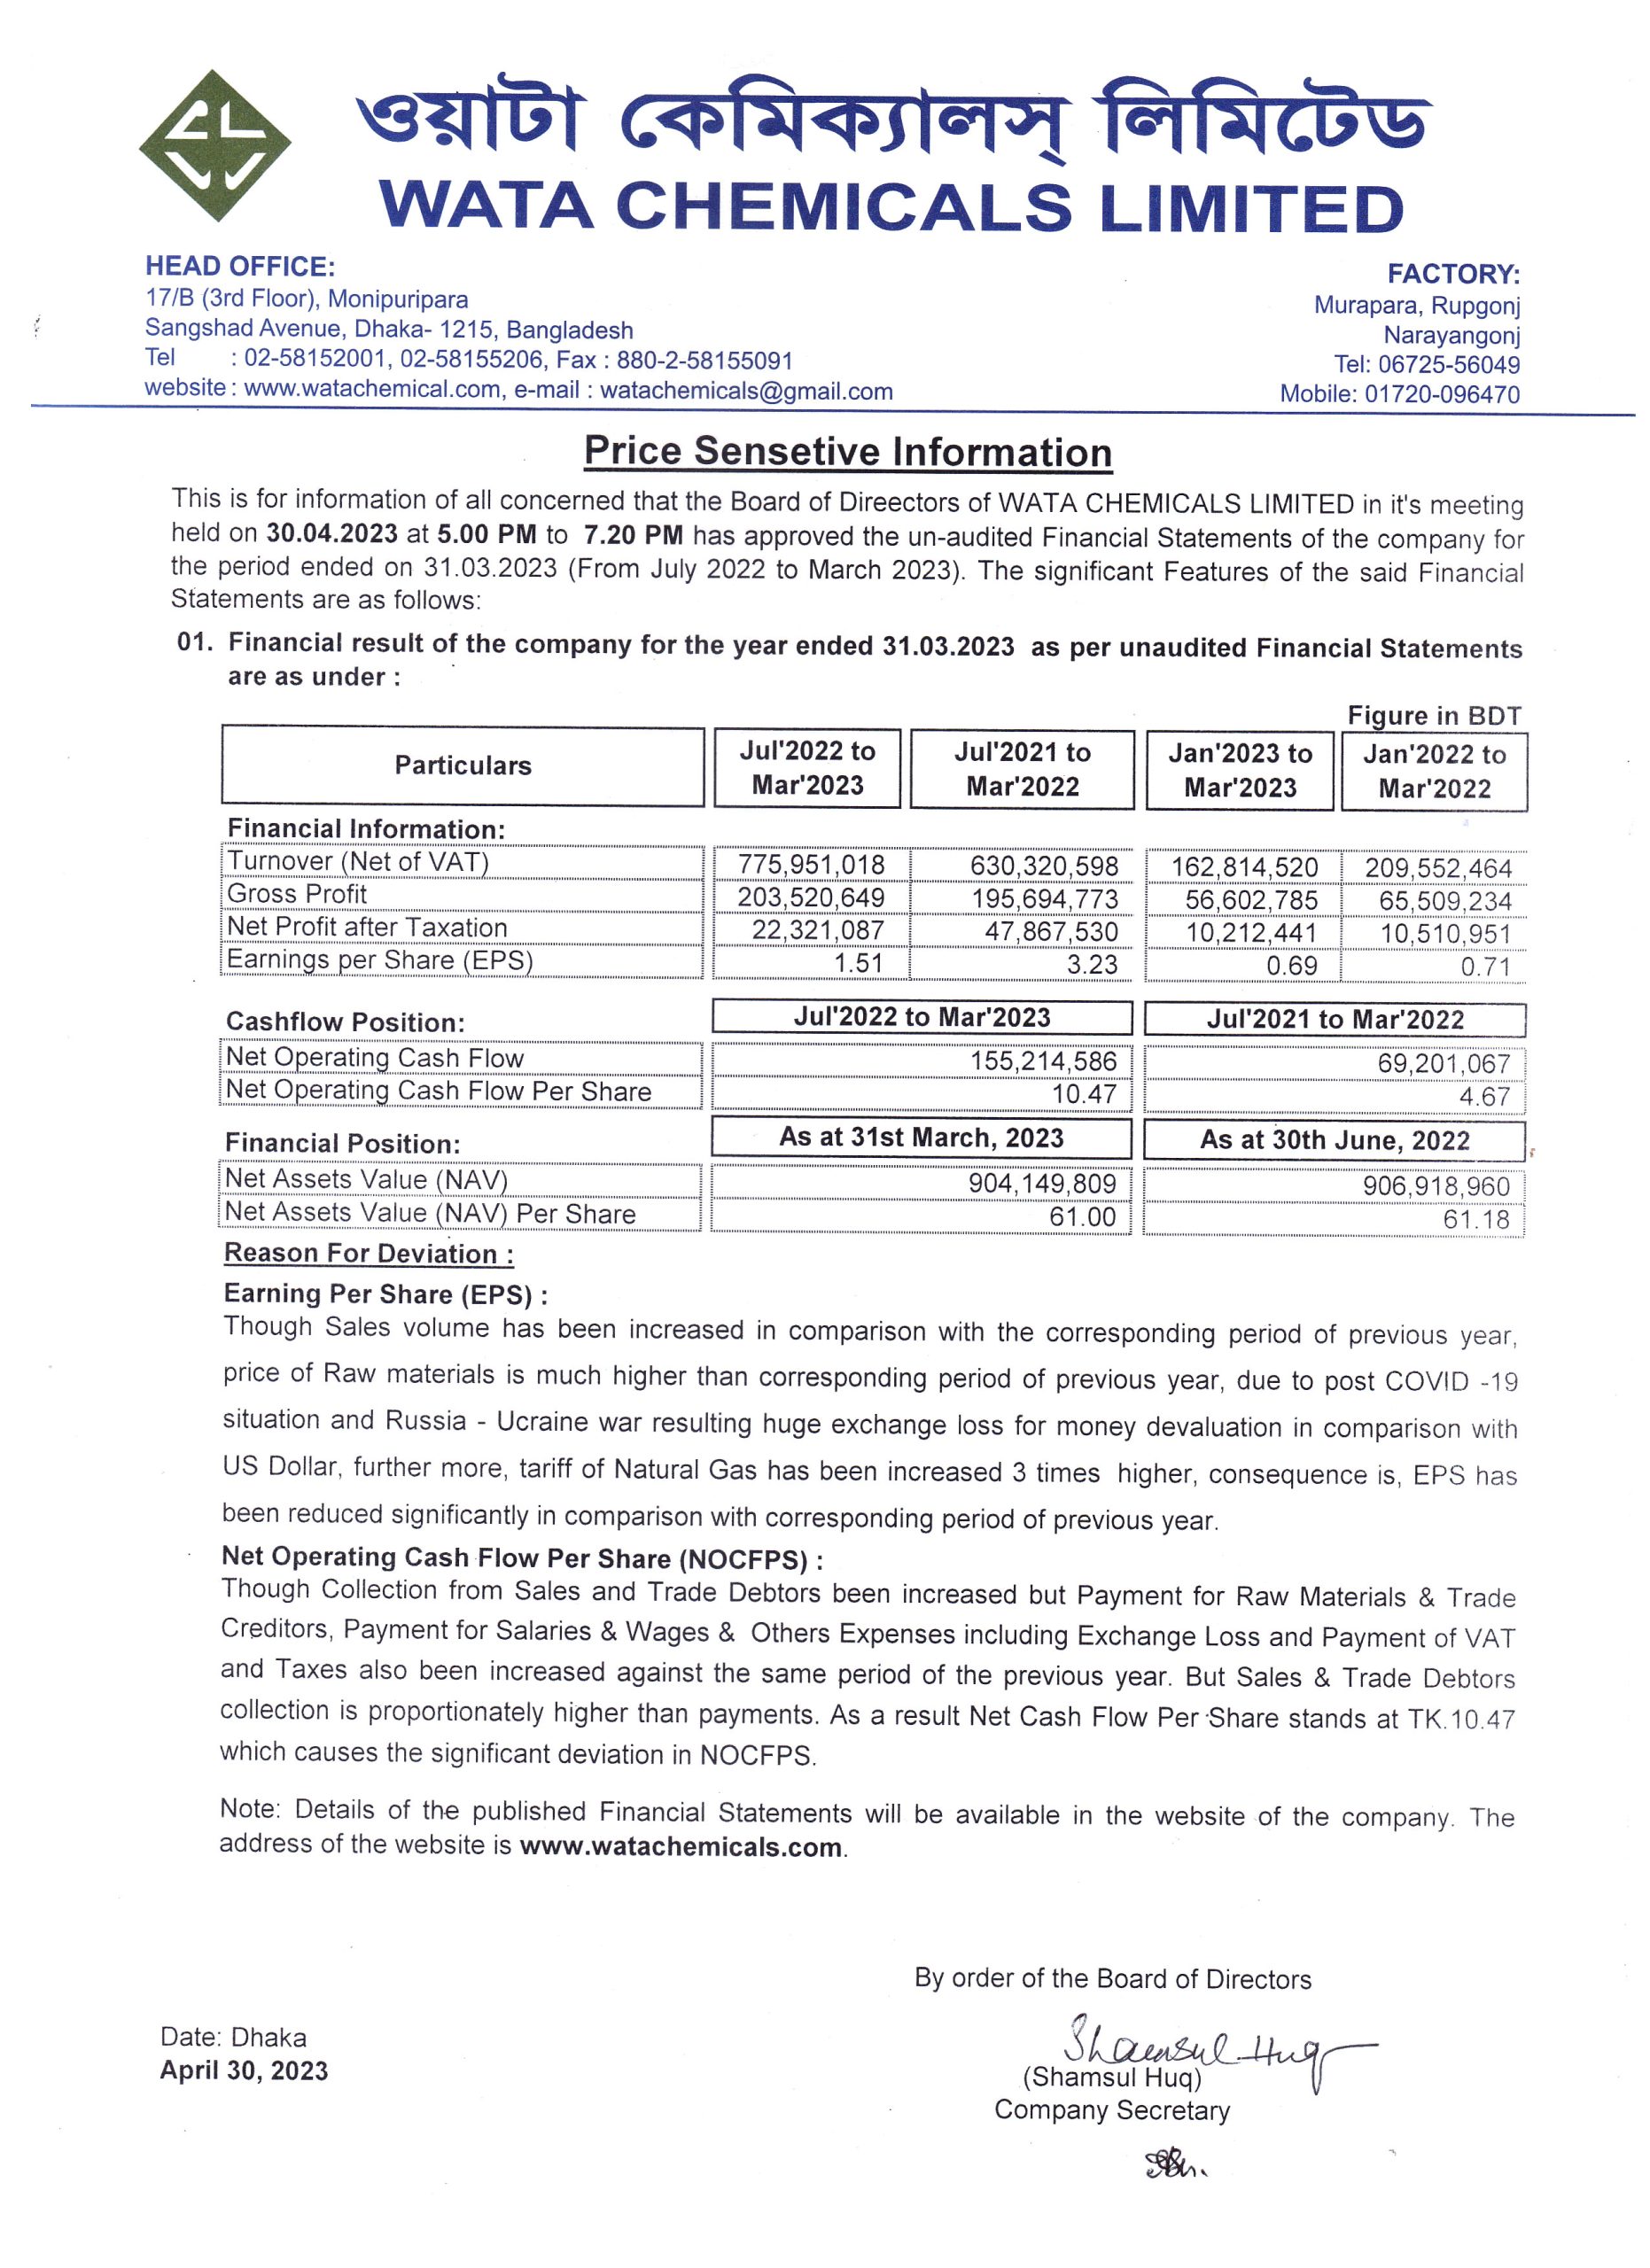 Price Sensitive Information Third-Quarter (Q3) of WATA Chemical Limited